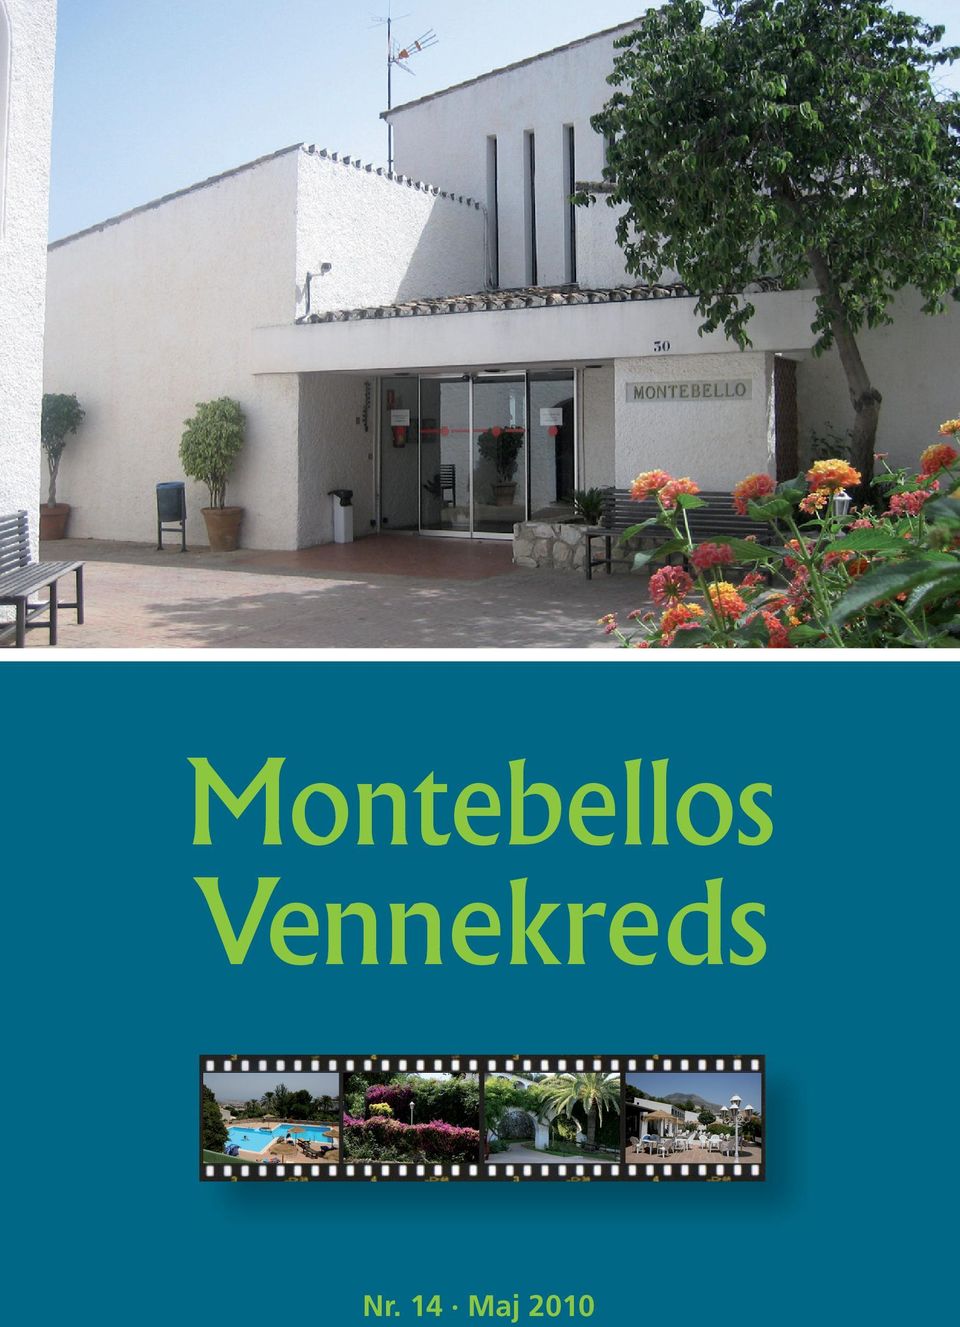 Montebellos Vennekreds - download